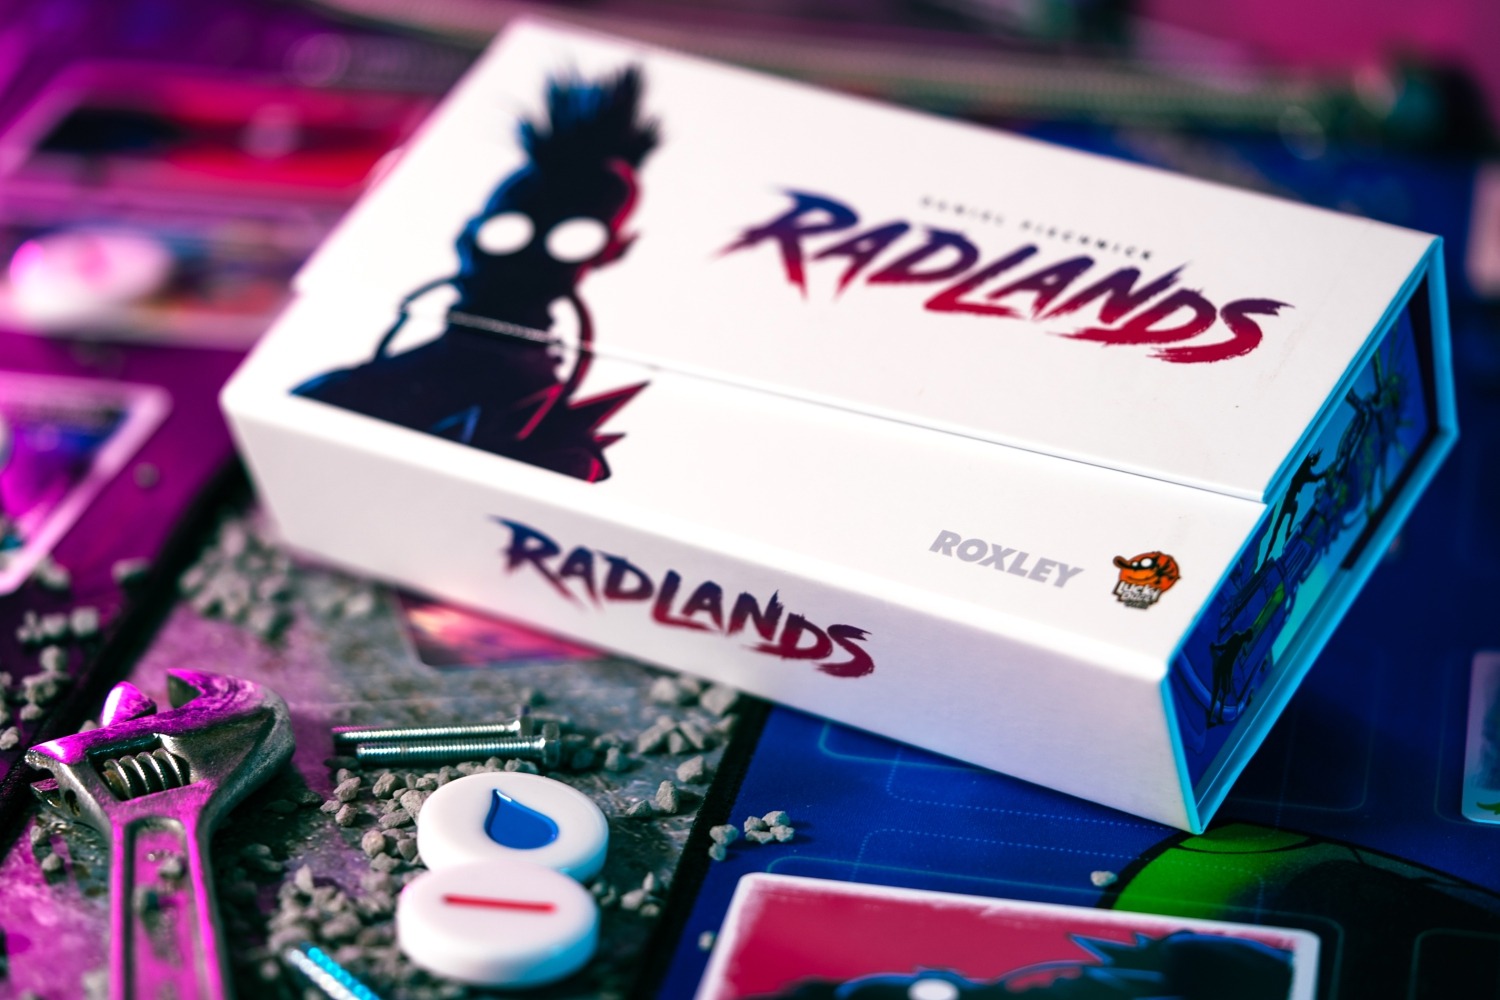 Radlands roxey games lucky duck games